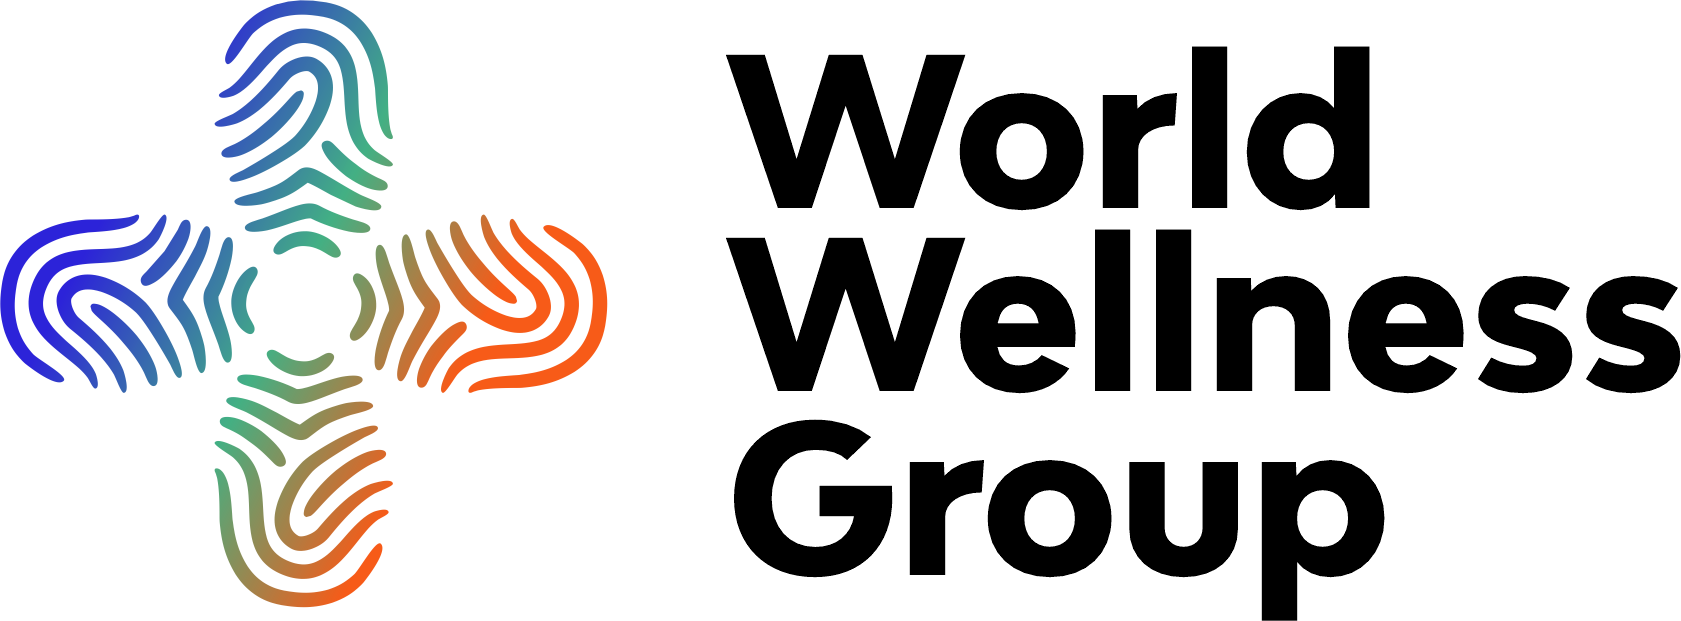 Profile of World Wellness Group